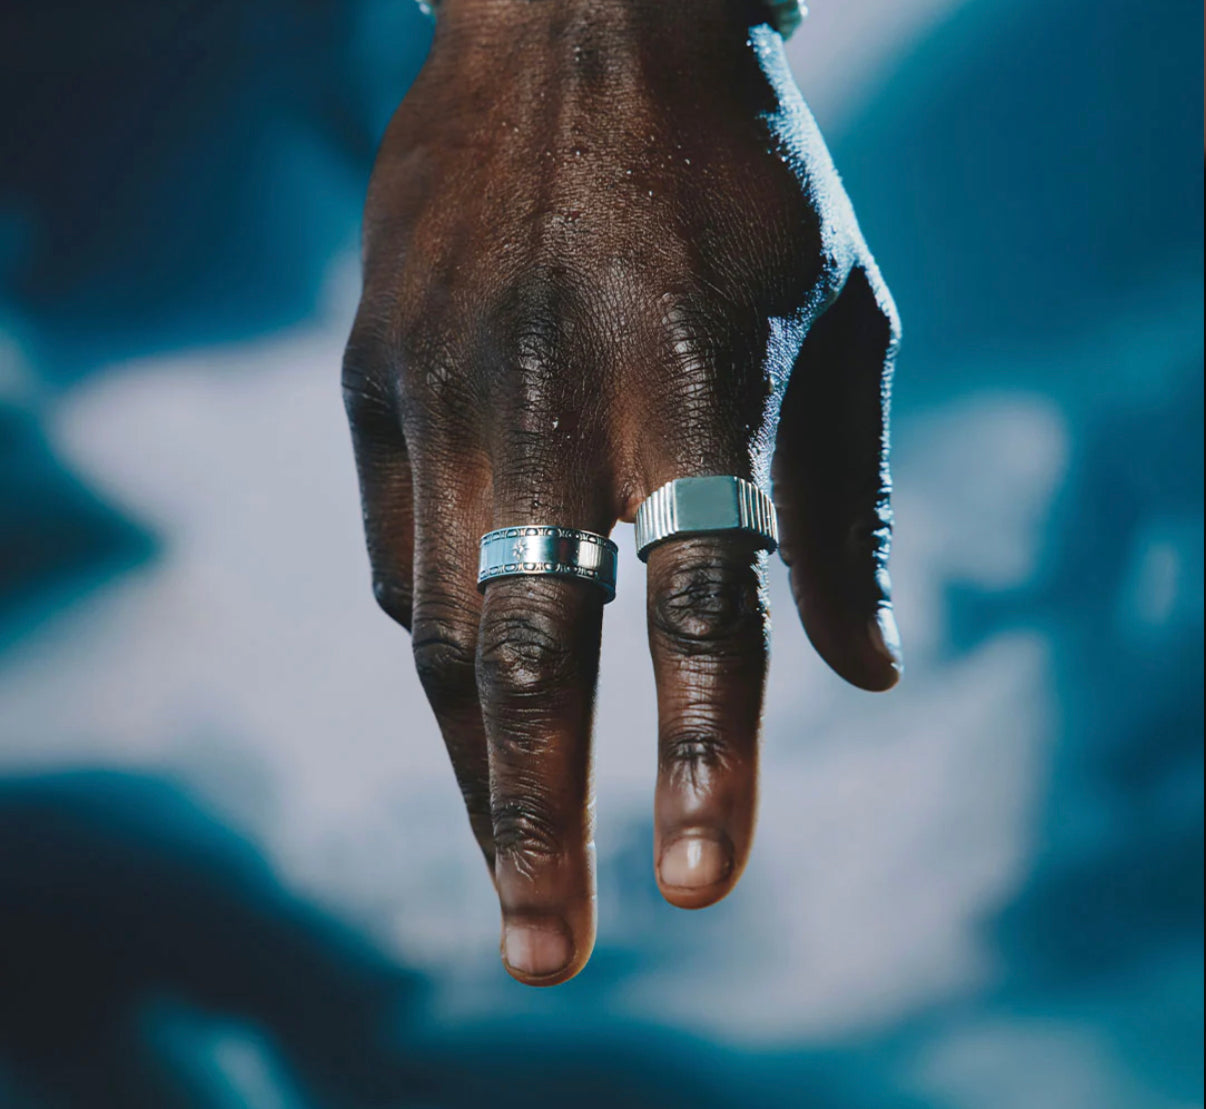 Serge De Nimes Silver Artemis Ring